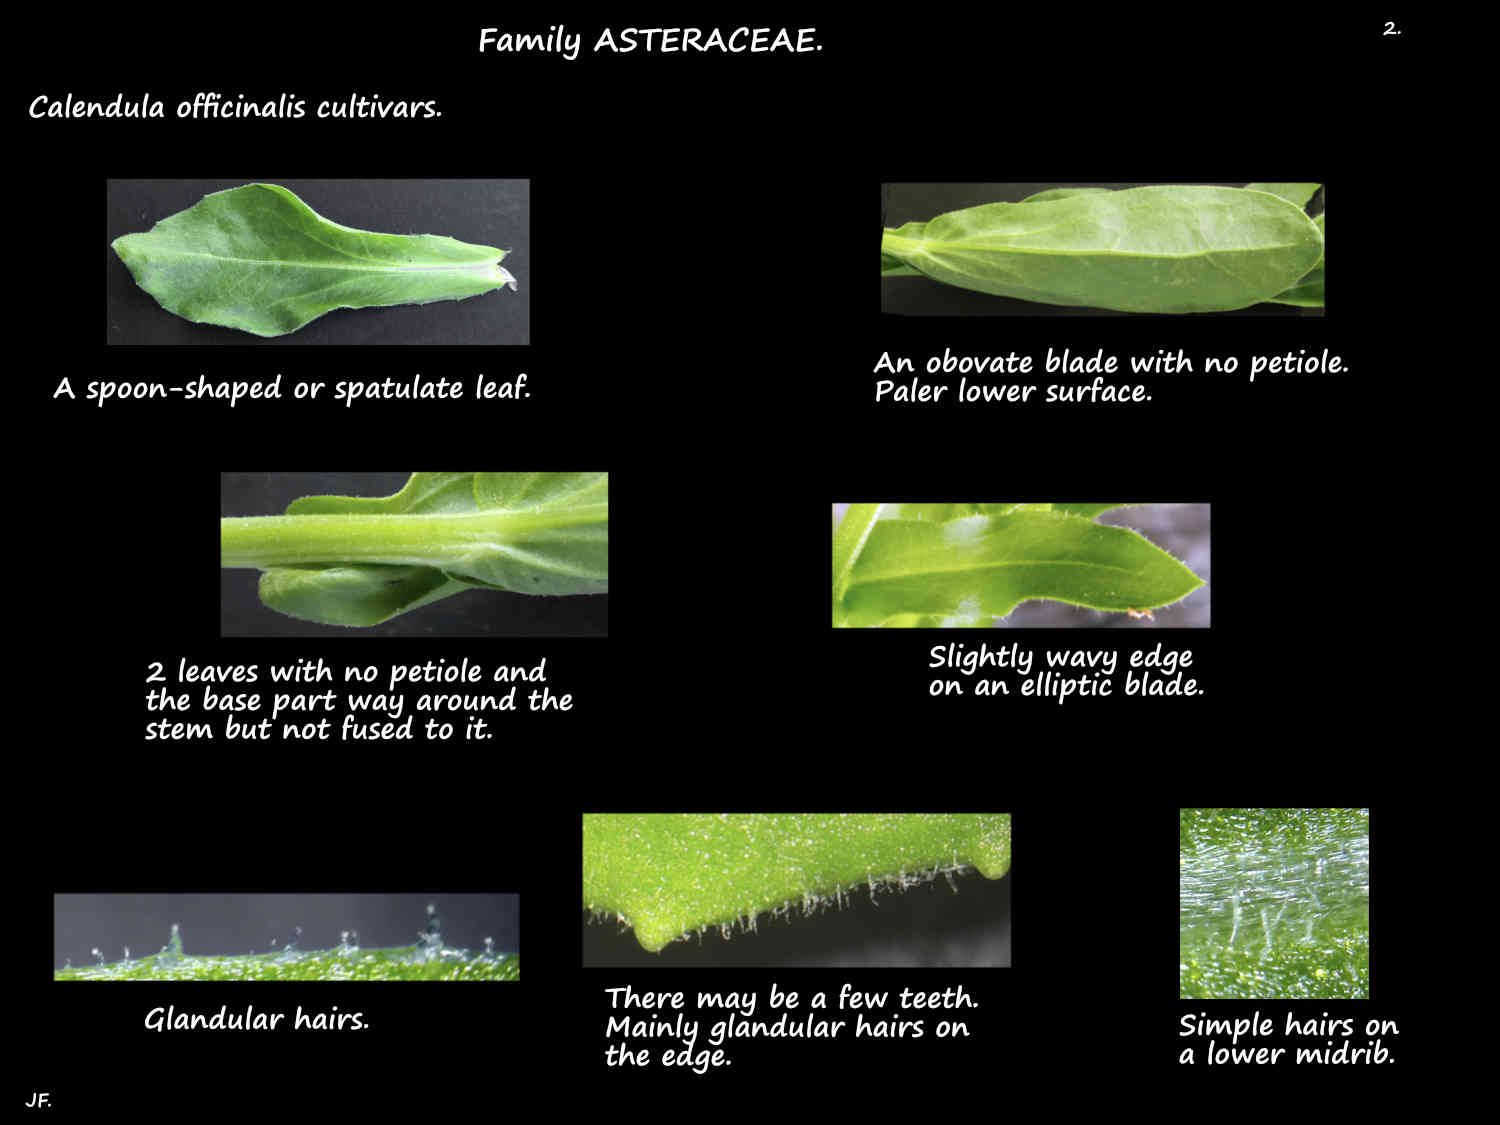 2 Calendula officinalis leaf shapes & hairs